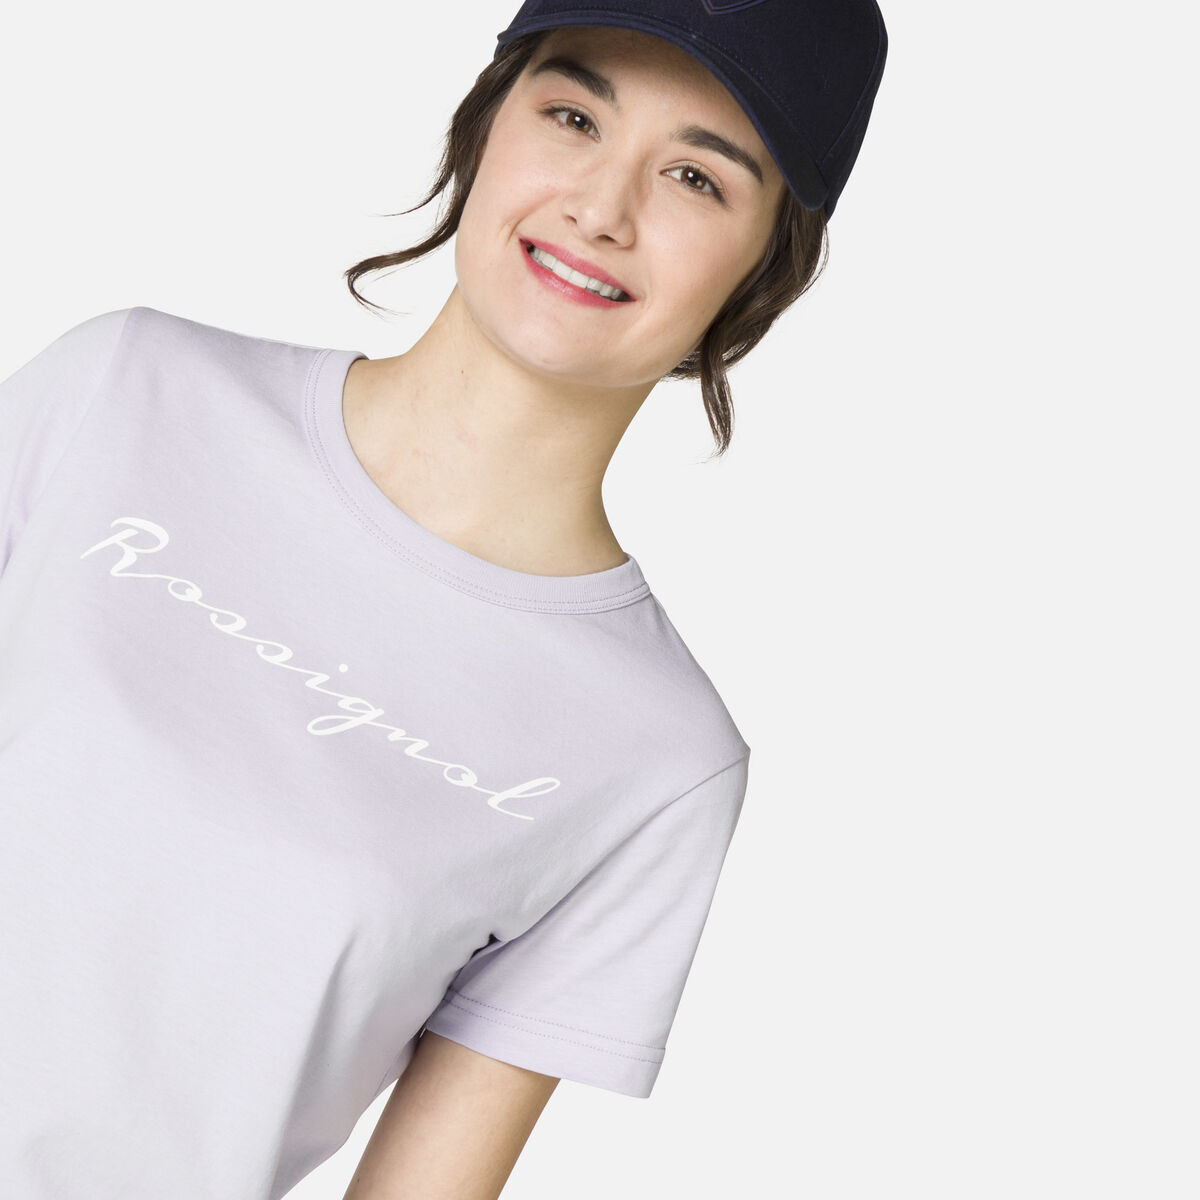 Rossignol Logo Damen-T-Shirt pinkpurple